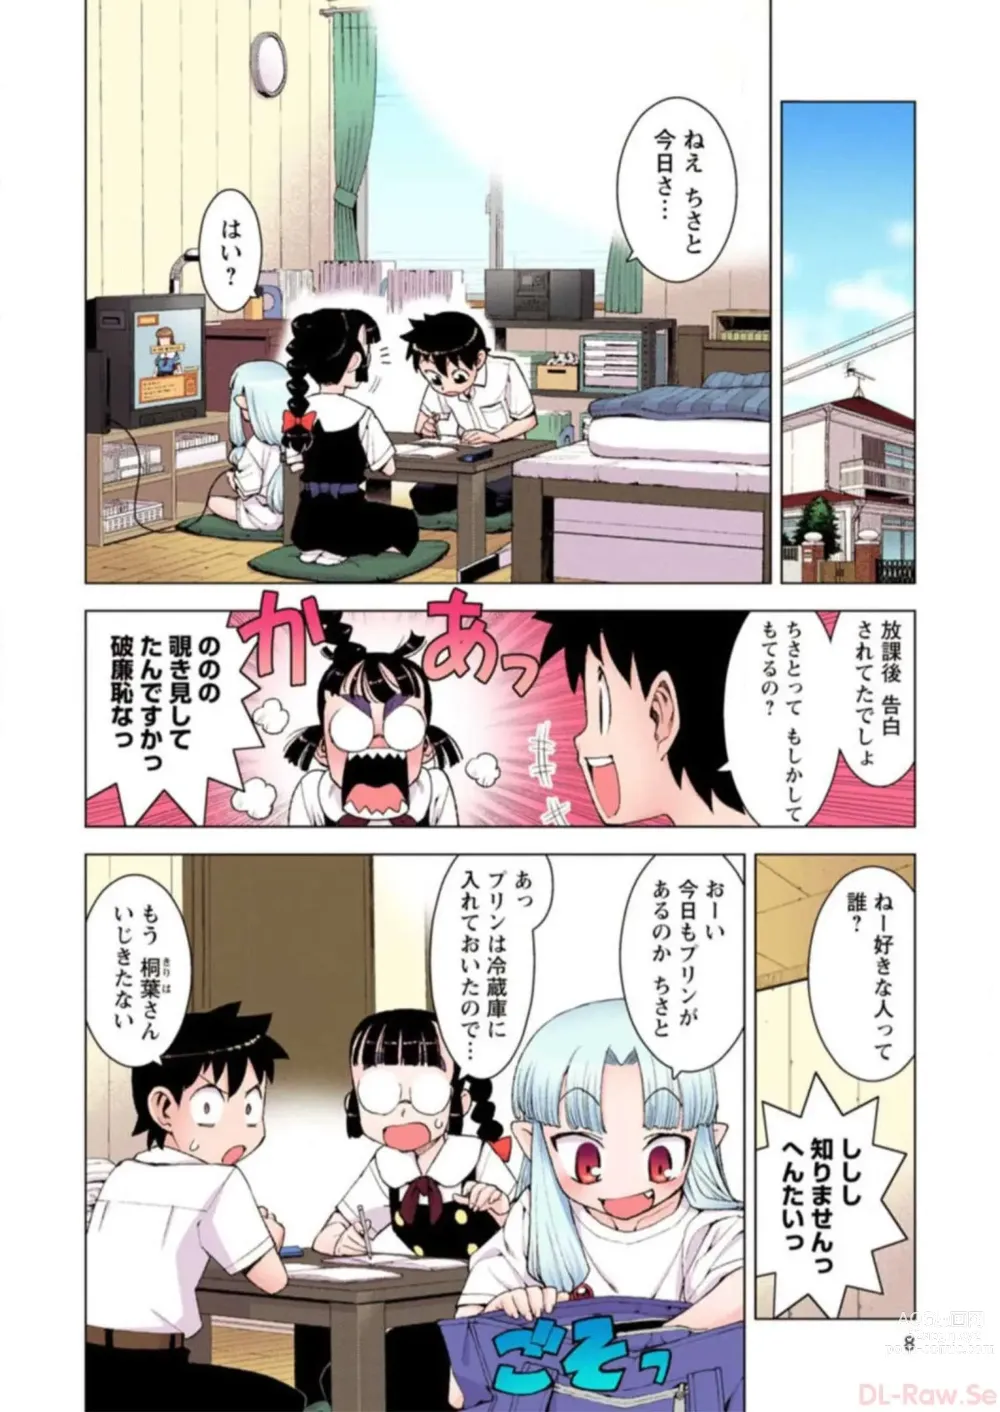 Page 8 of manga Tsugumomo Digital Colored Comics V3